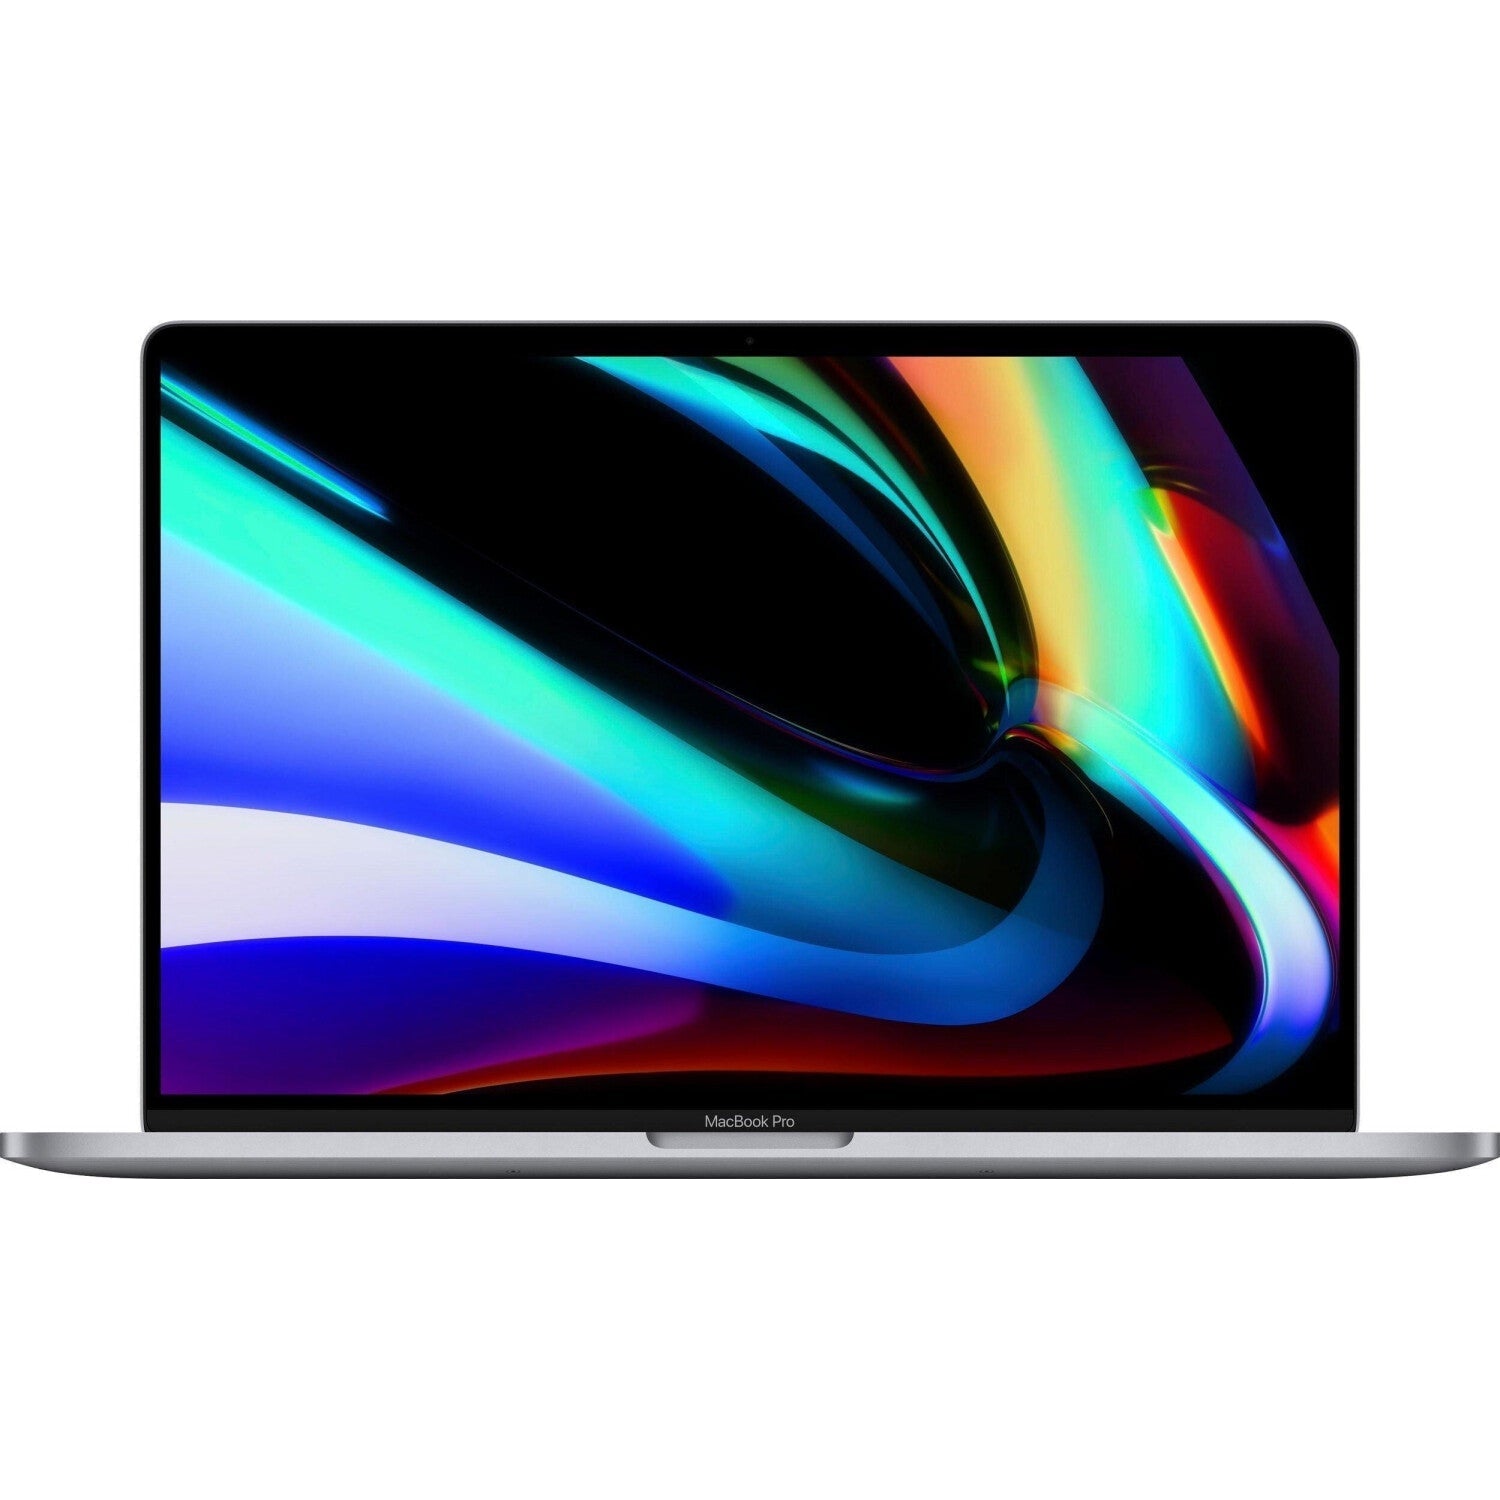 Apple MacBook Pro 16" MVVJ2B/A (2019) Laptop, Intel Core i7, 16GB, 512GB, Space Grey - Open Box